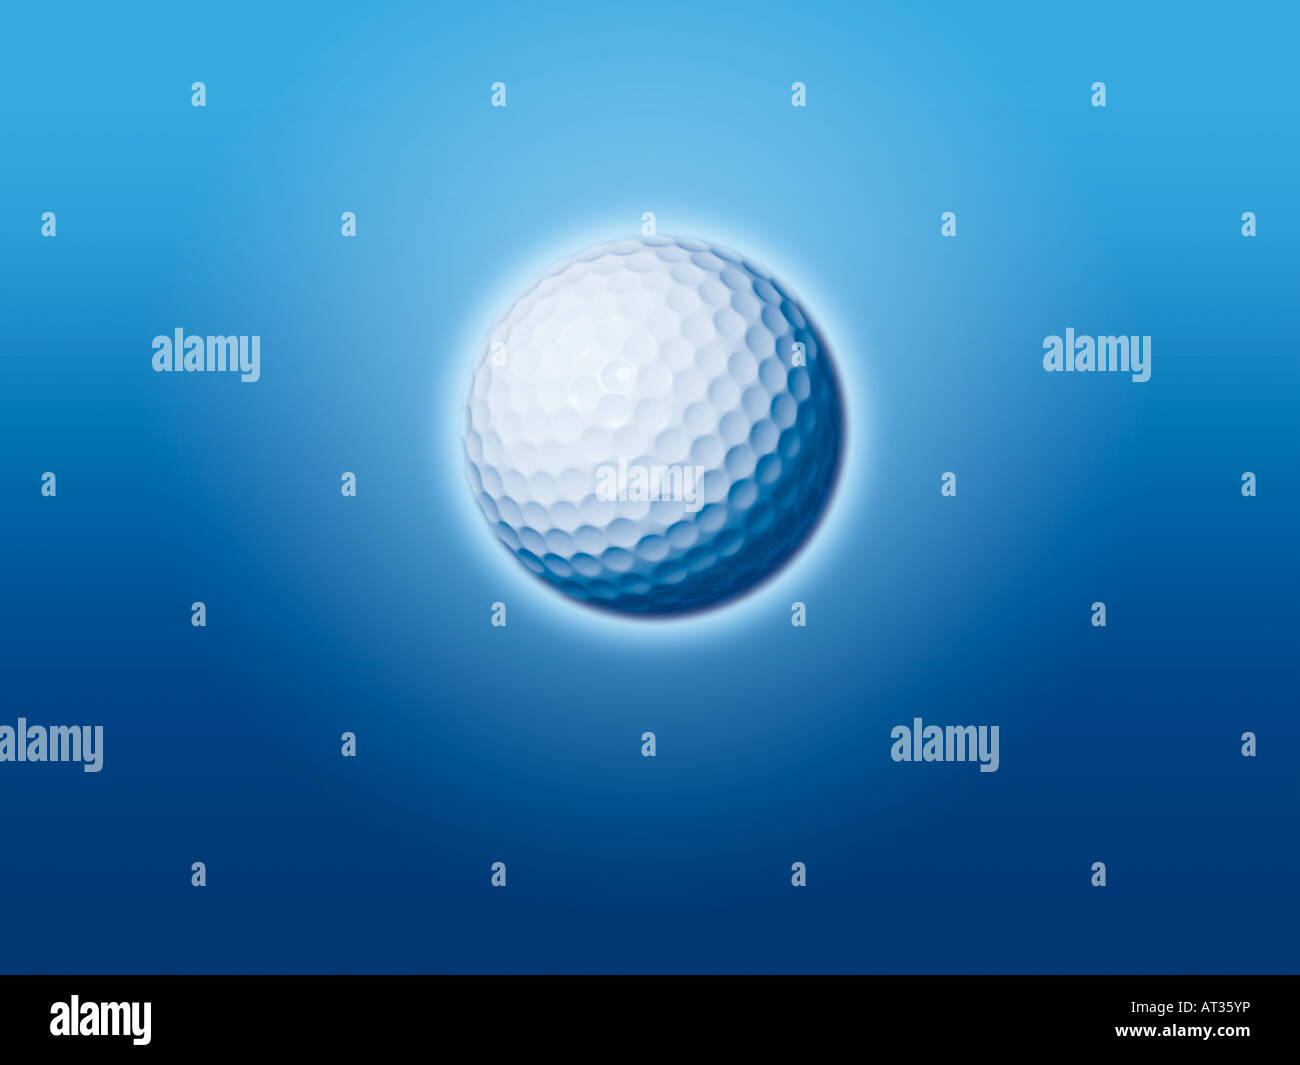 A golf ball, plain background Stock Photo